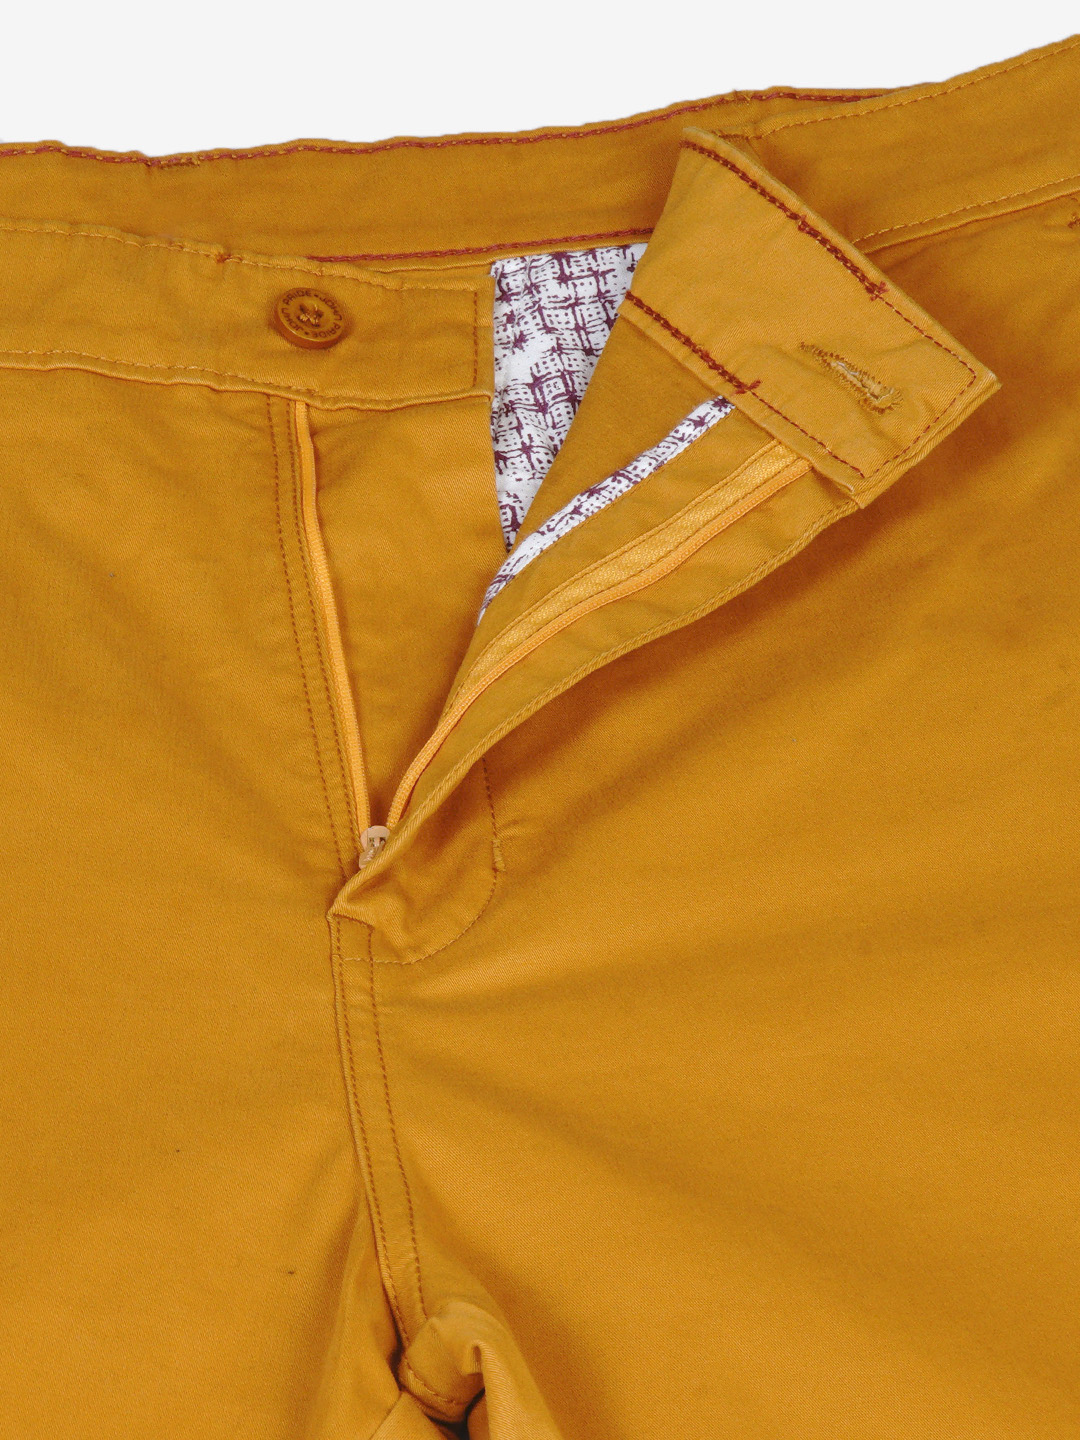 Buy Men Yellow Mid Rise Regular Fit Pants Online In India